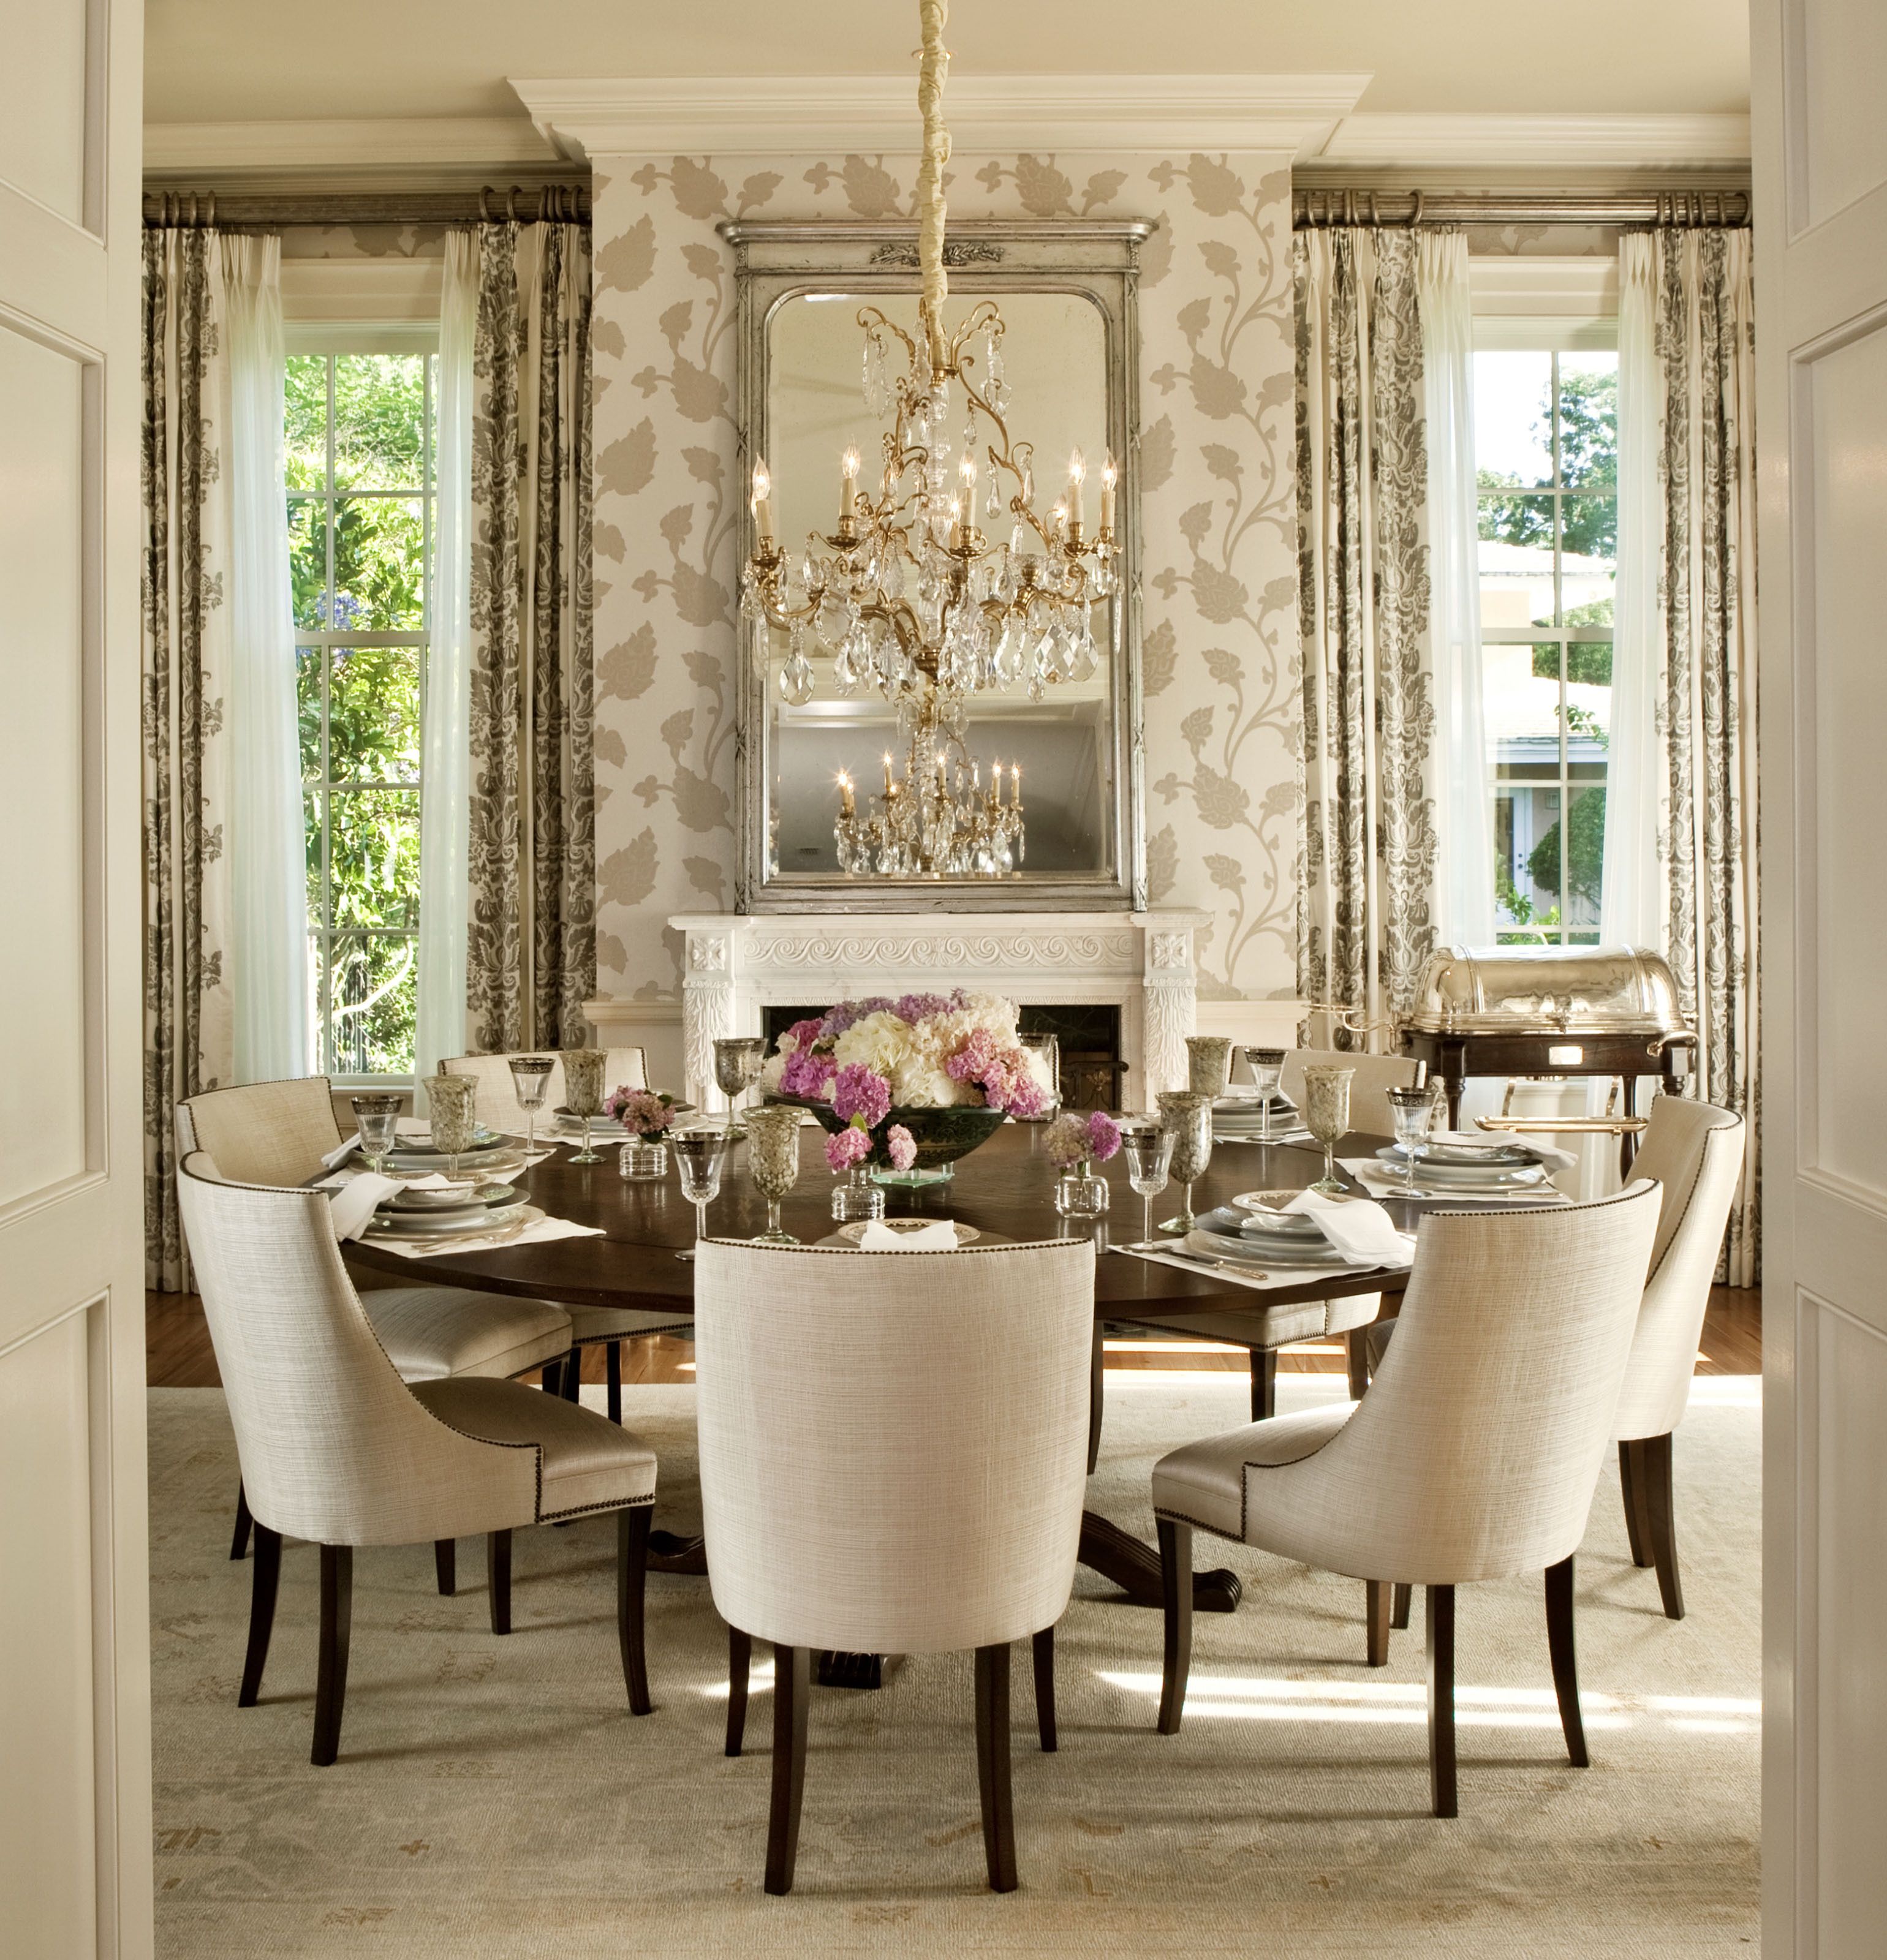 30 Best Formal Dining Room Design And Decor Ideas #828 | Dining Room Ideas